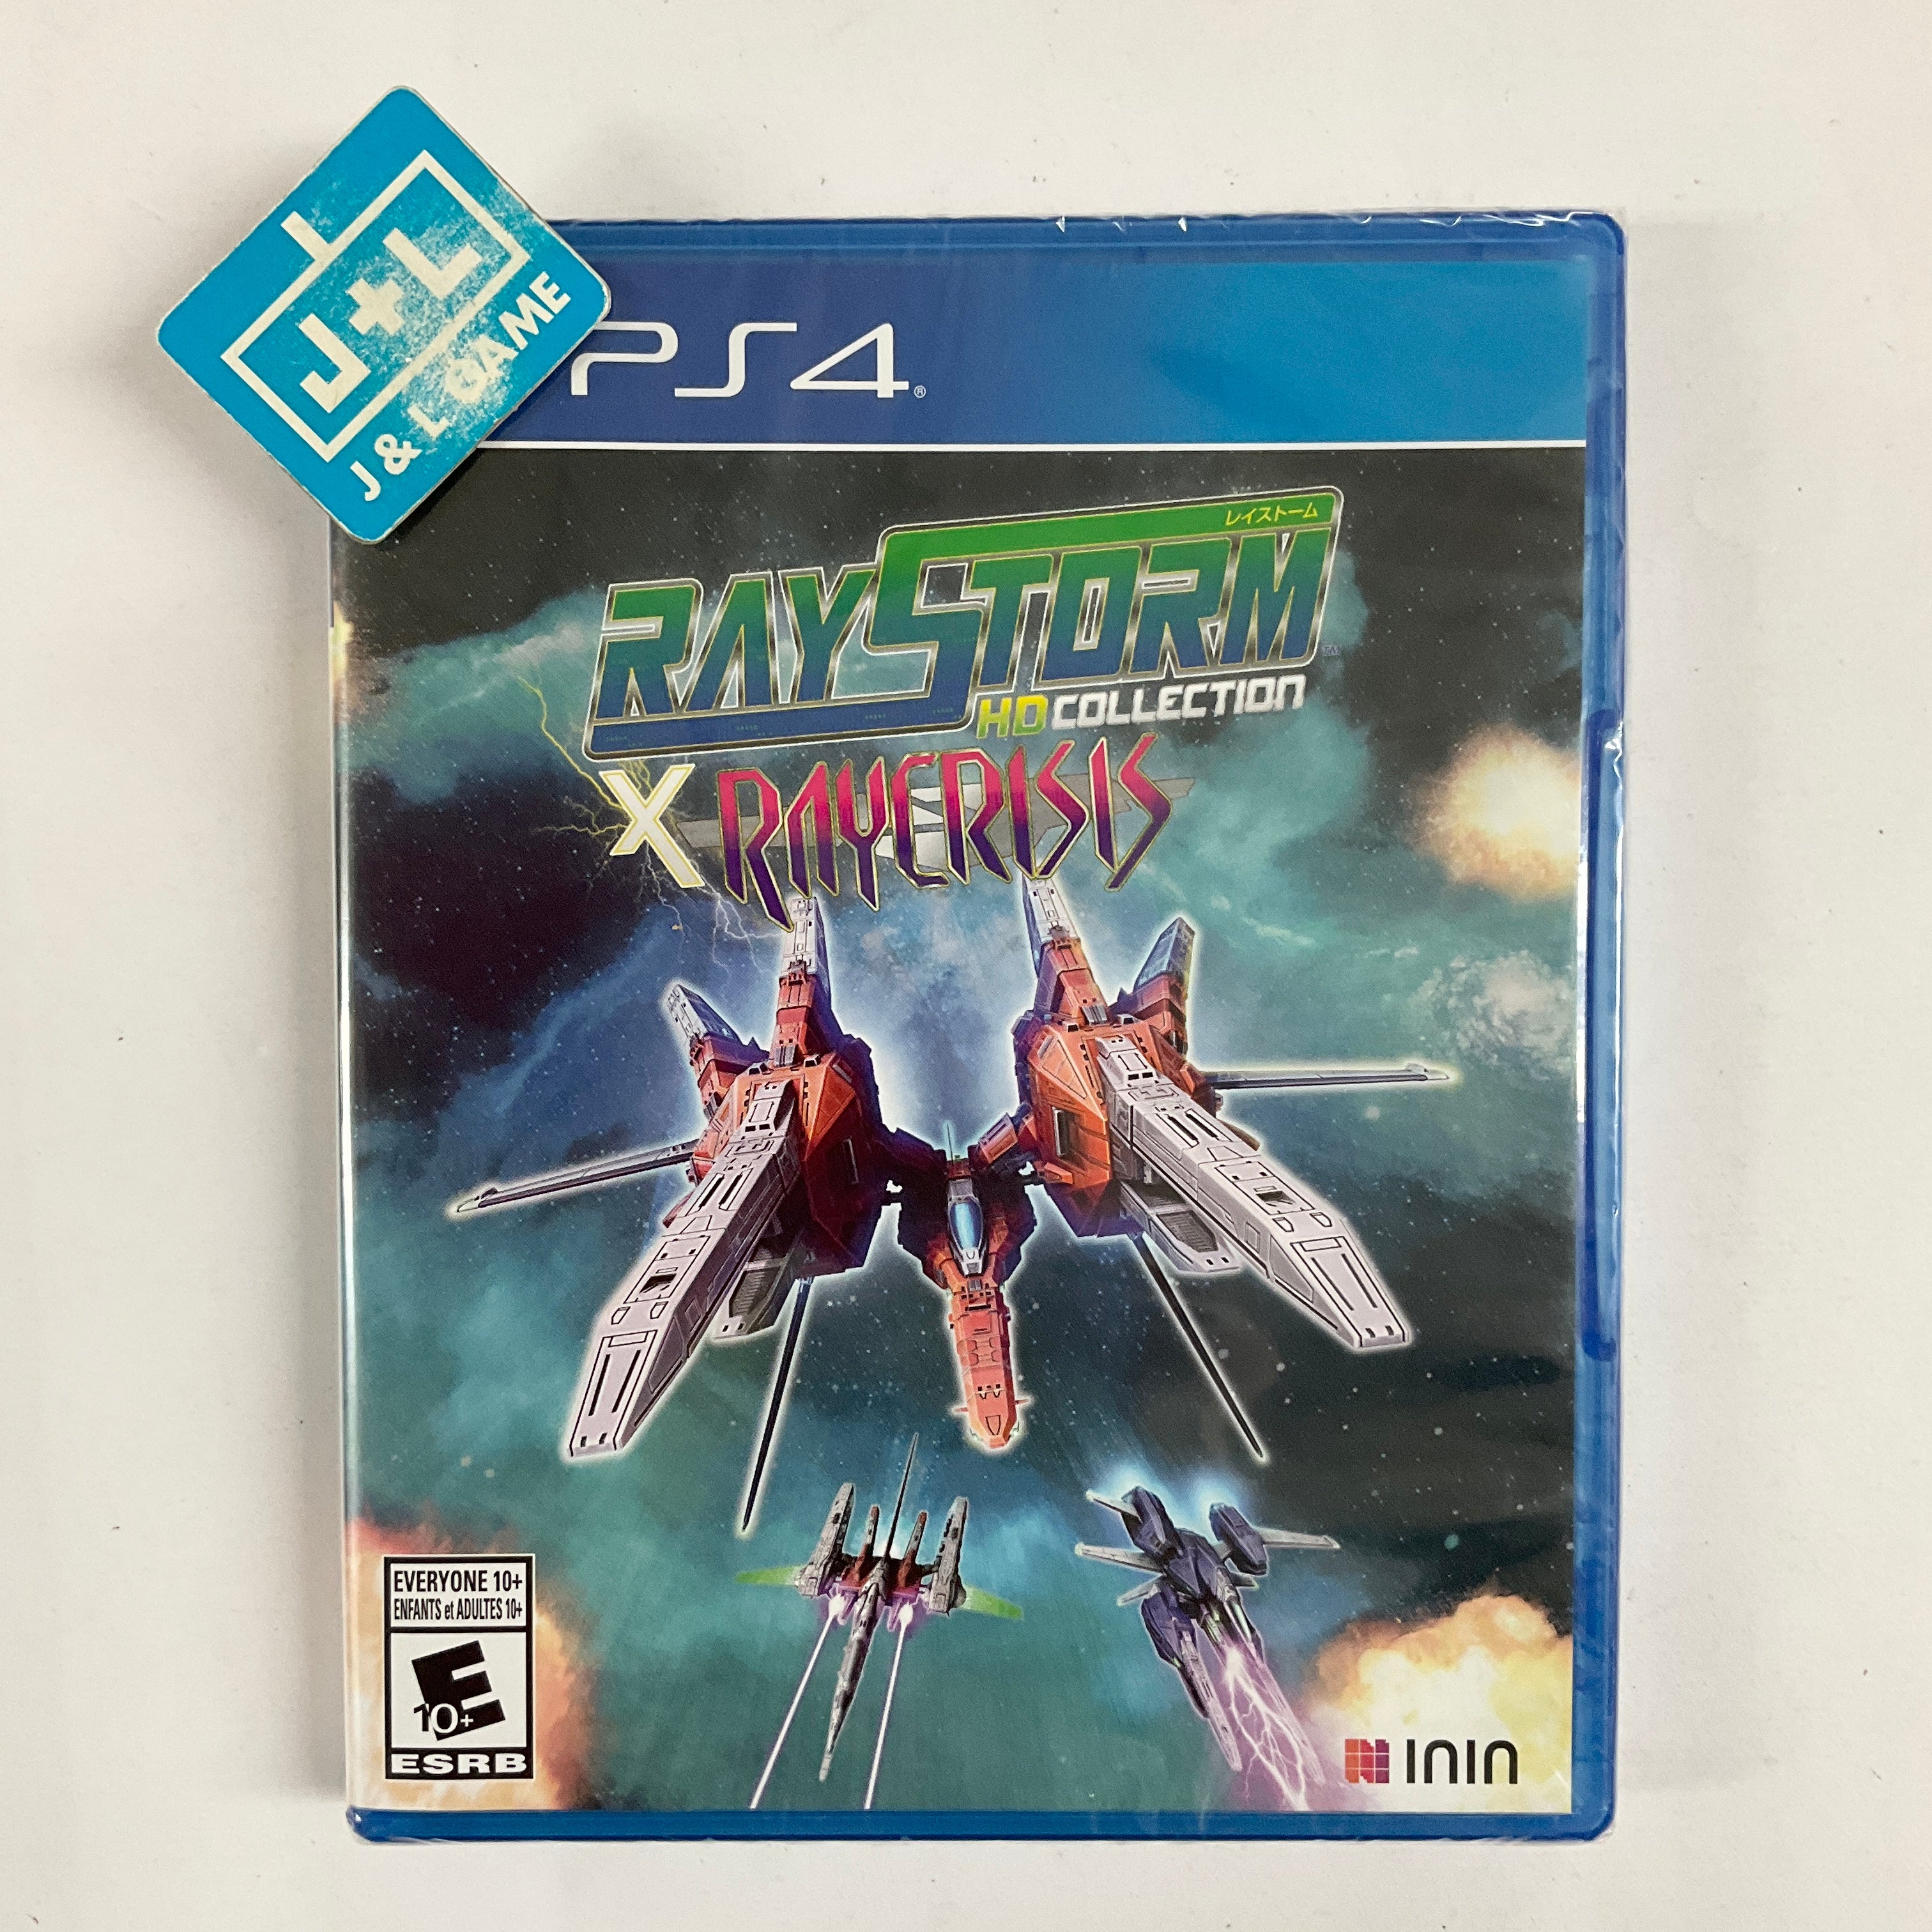 RayStorm X RayCrisis HD Collection - (PS4) PlayStation 4